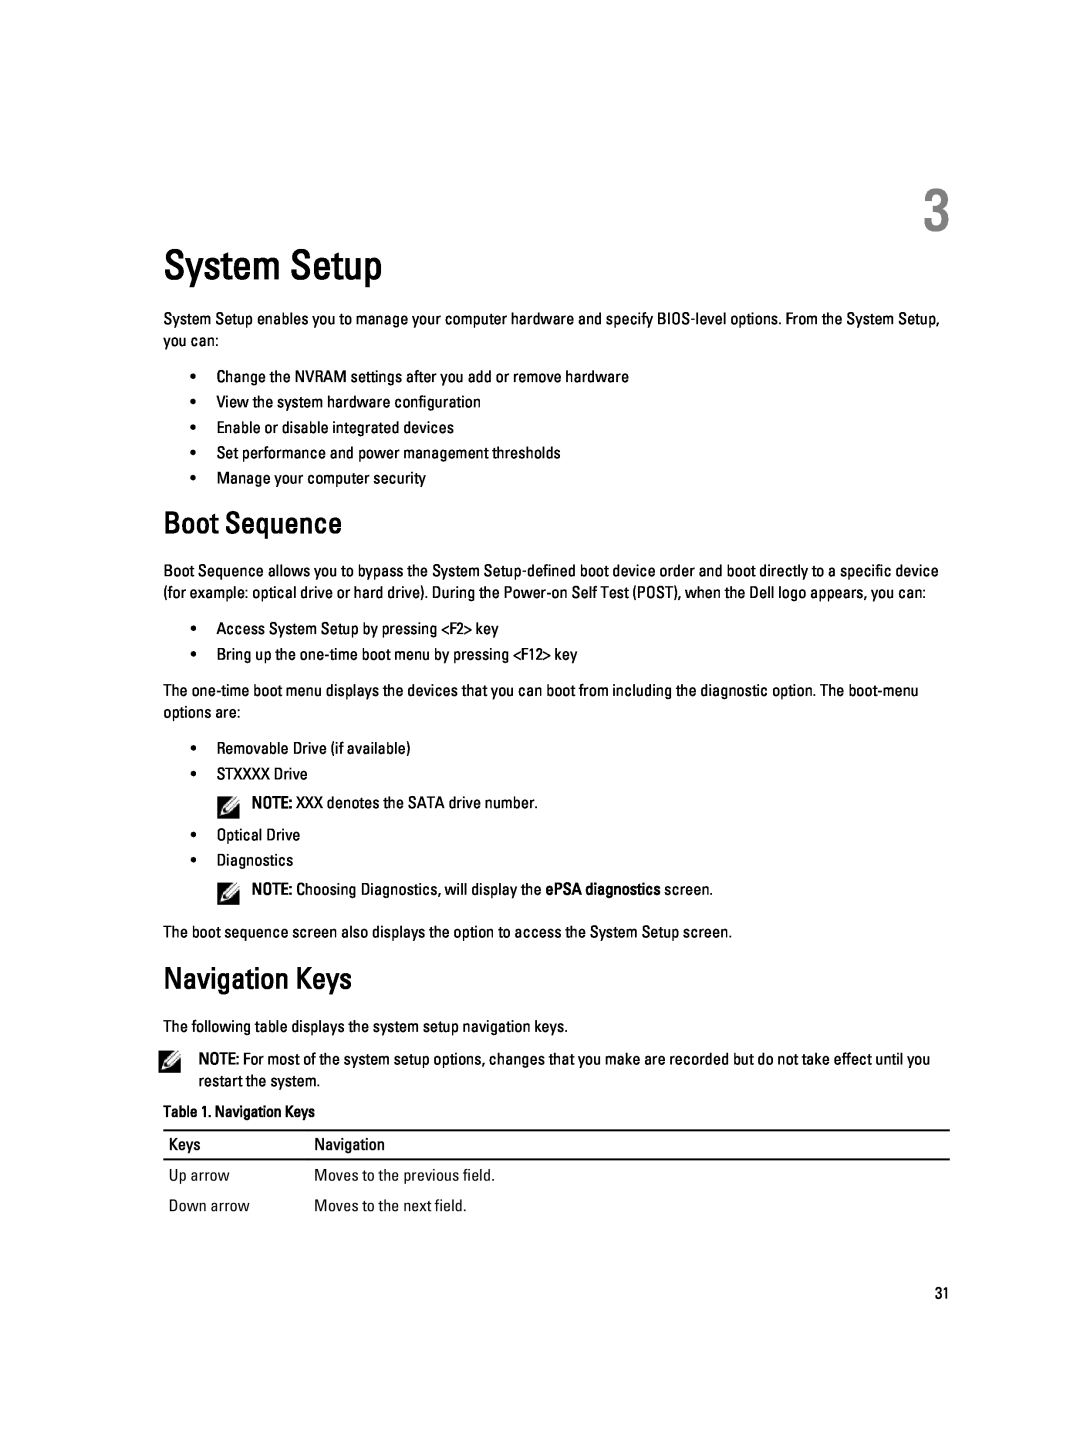 Dell T1700 owner manual System Setup, Boot Sequence, Navigation Keys 